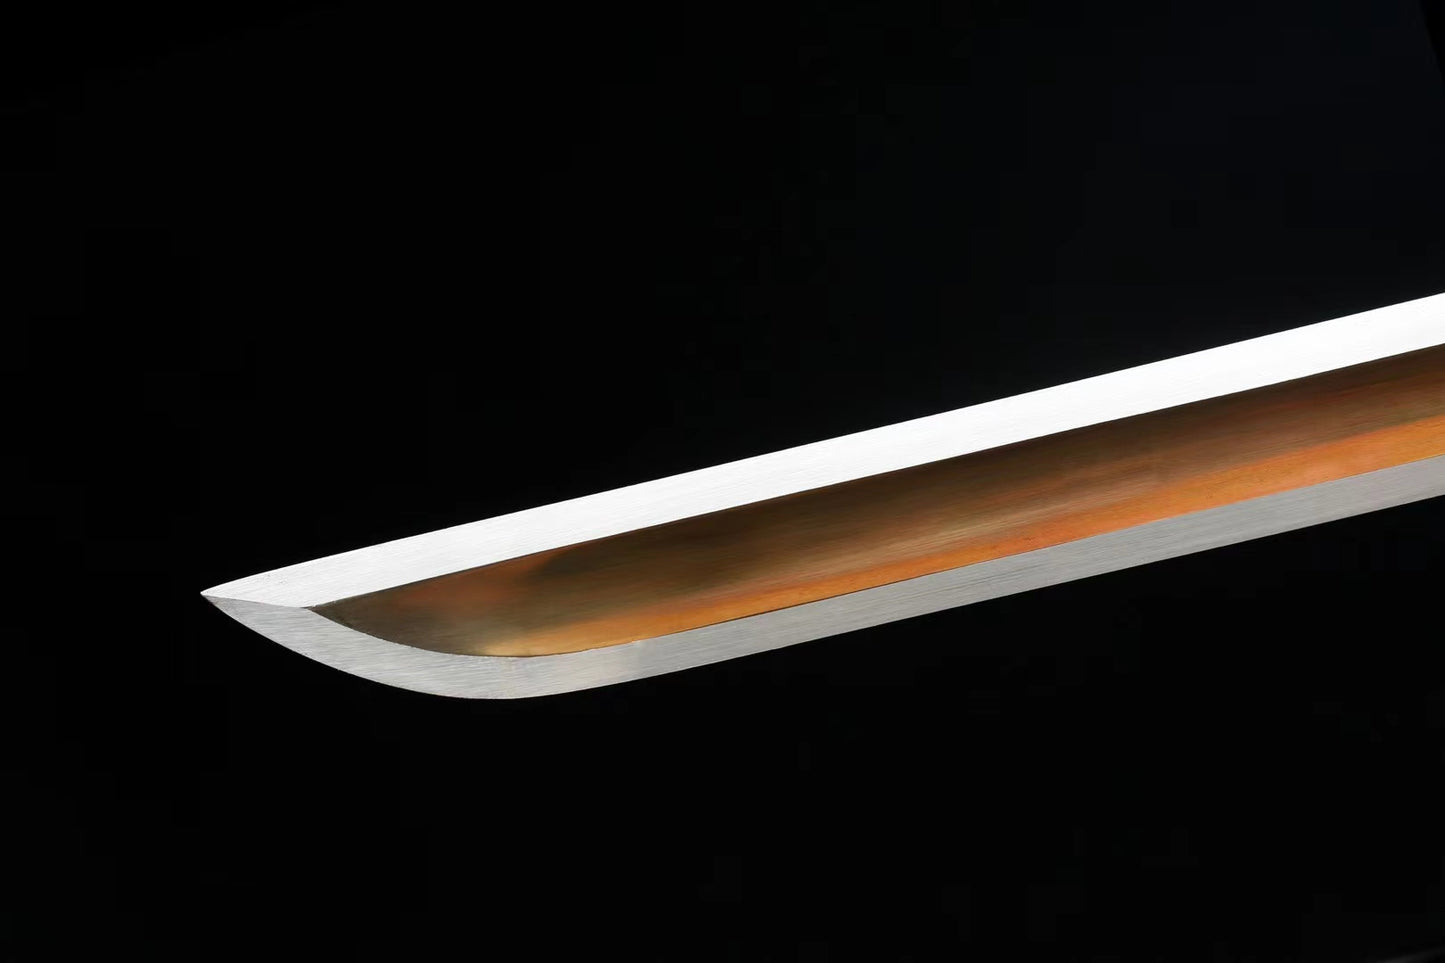 Hanwu jian,High carbon steel blade,Black wood scabbard - Chinese sword shop